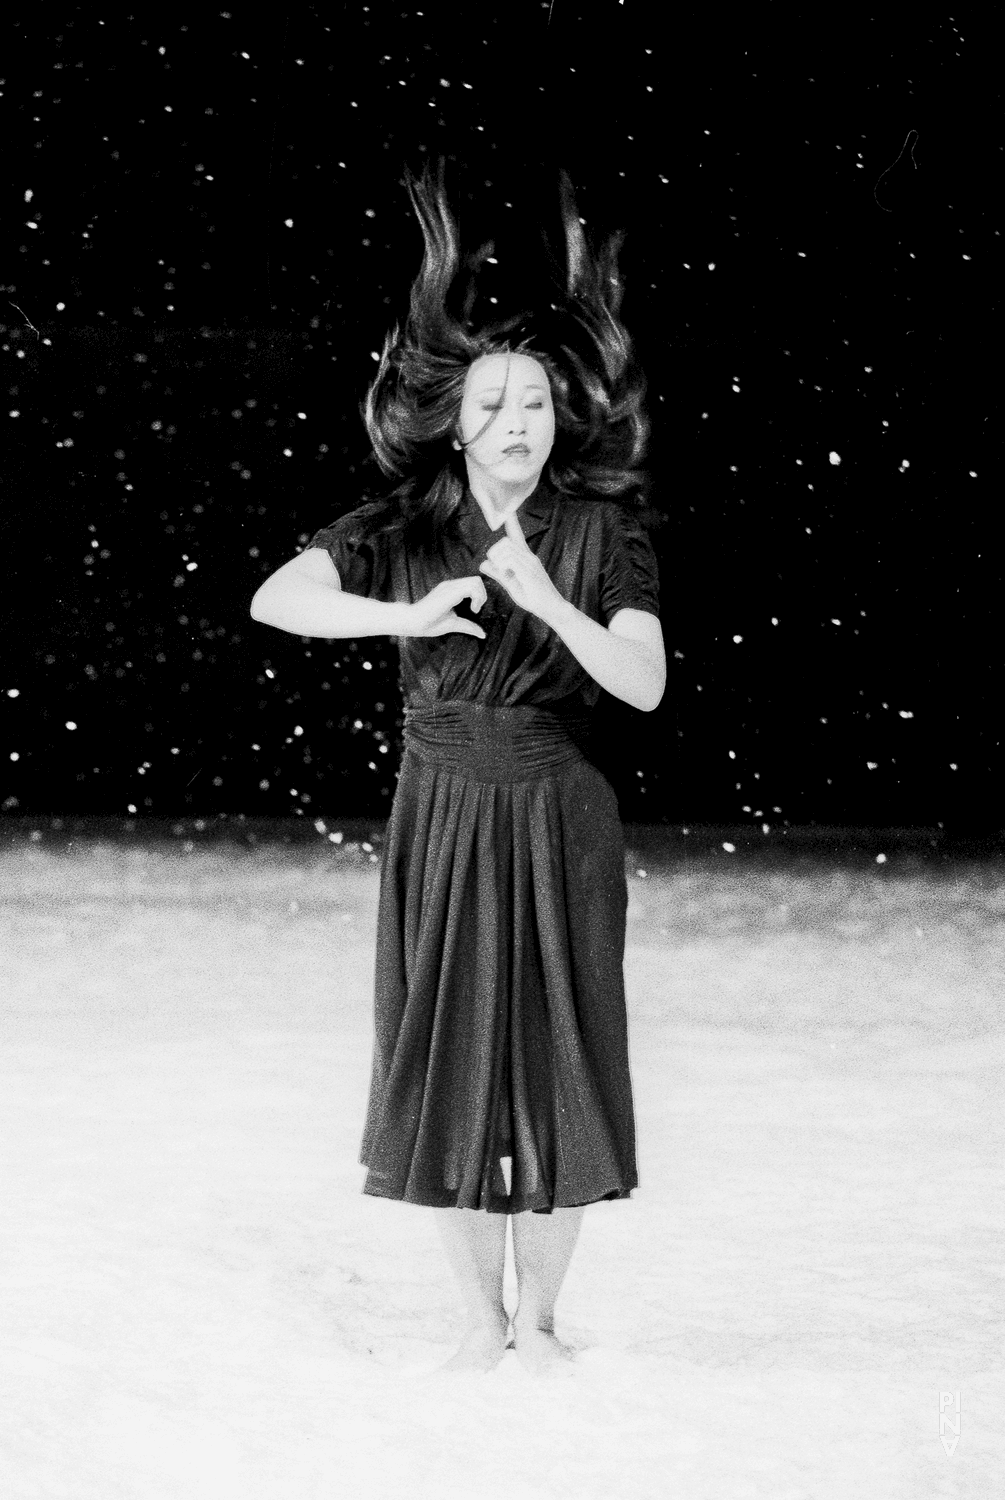 Mariko Aoyama in “Tanzabend II” by Pina Bausch